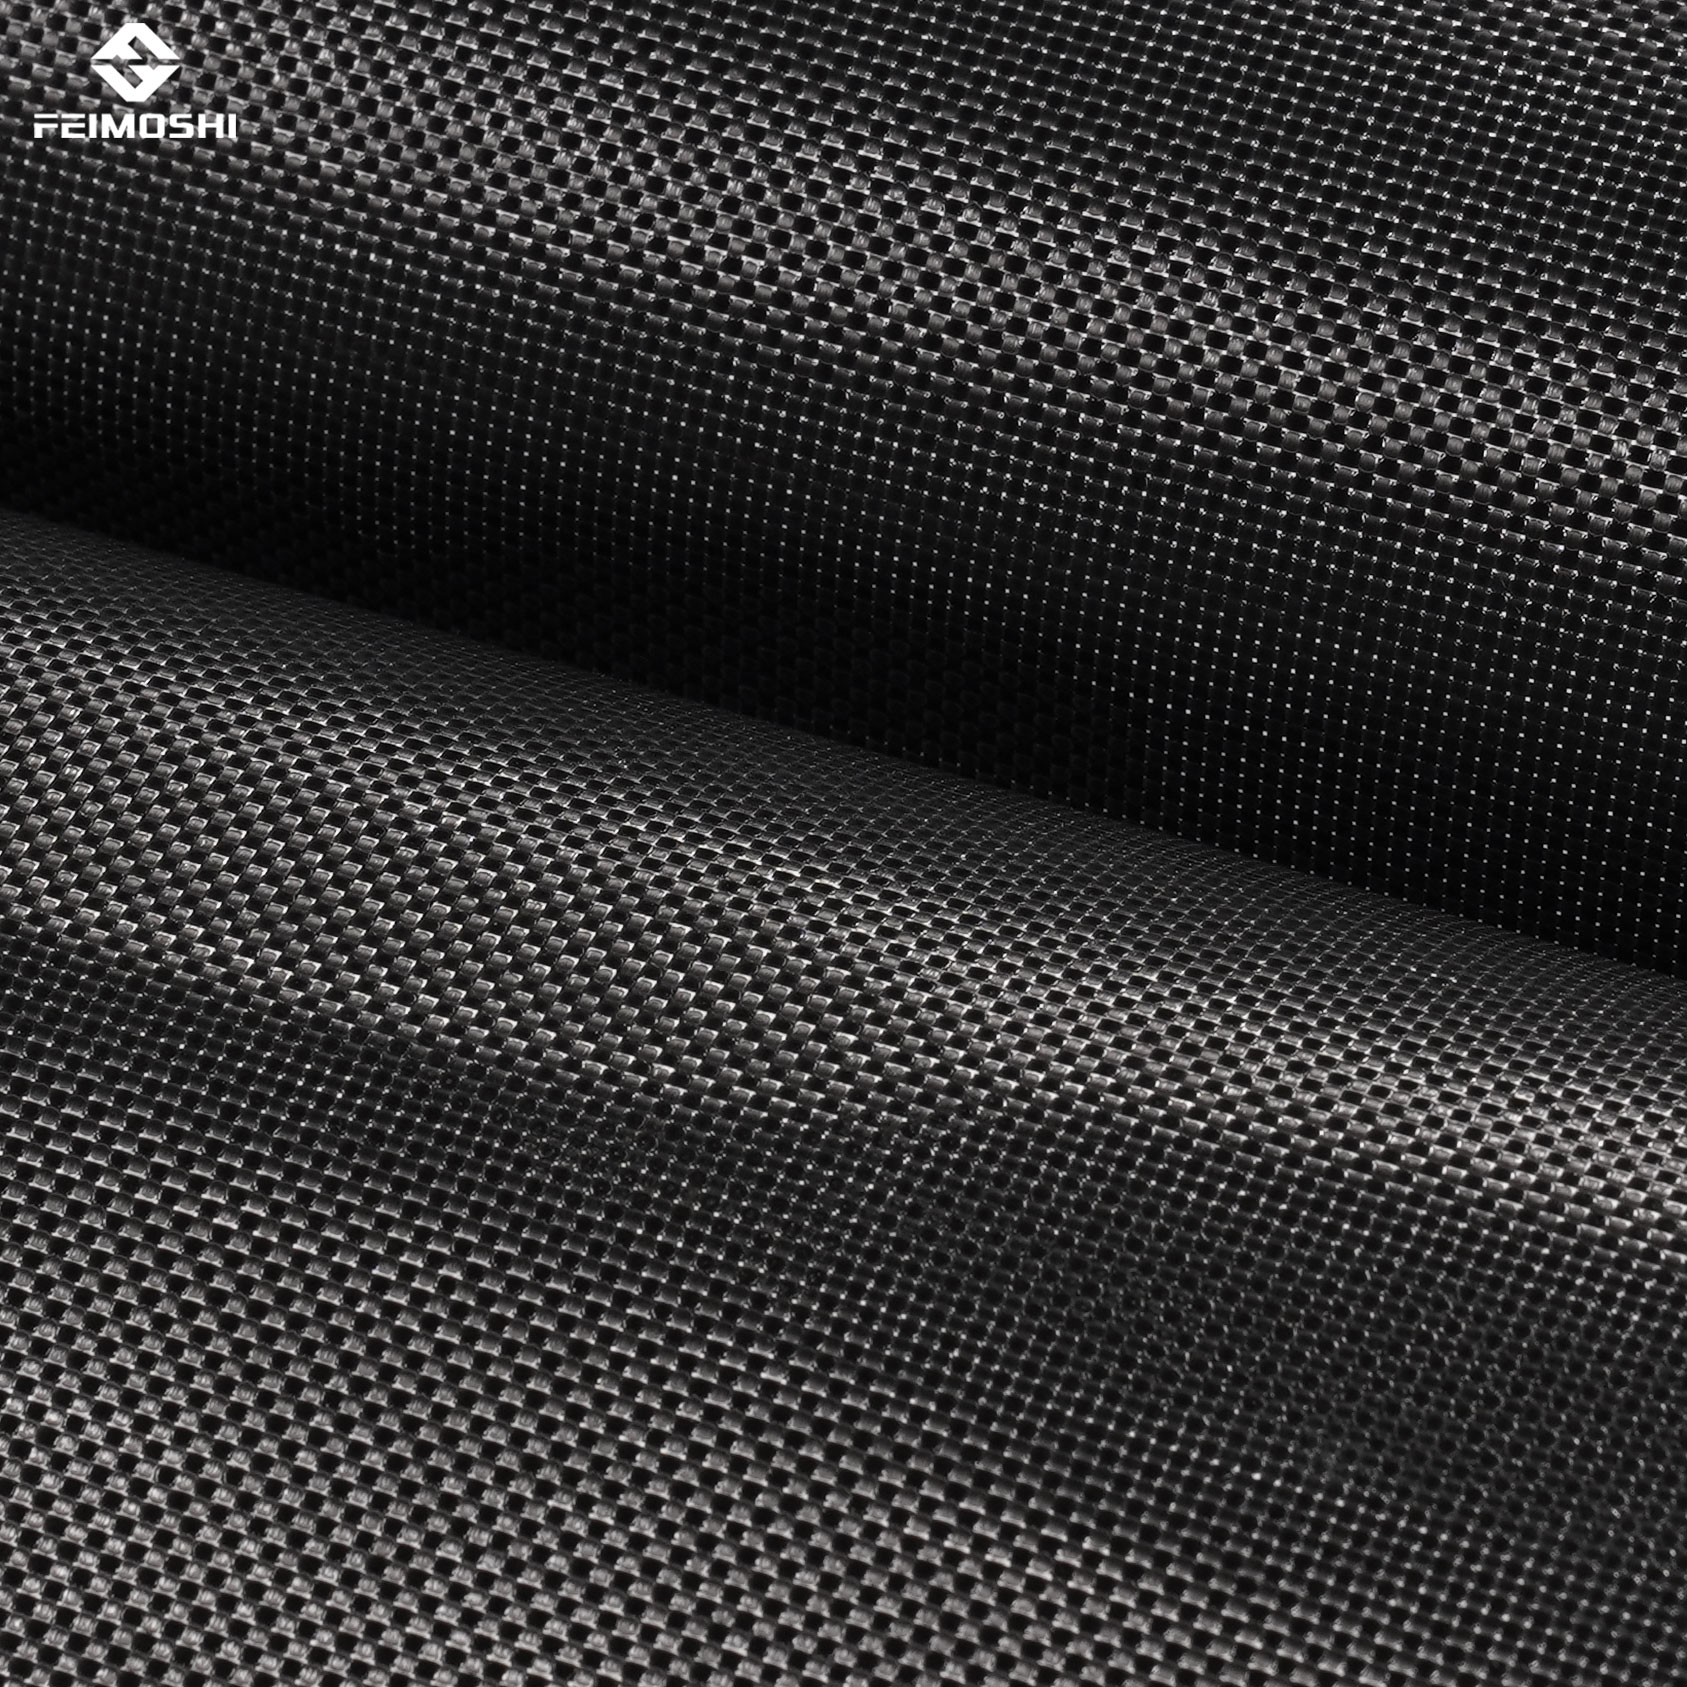 2021 High quality Customized Composite Part - 3K twill matte 200g prepreg carbon fiber cloth – Feimoshi